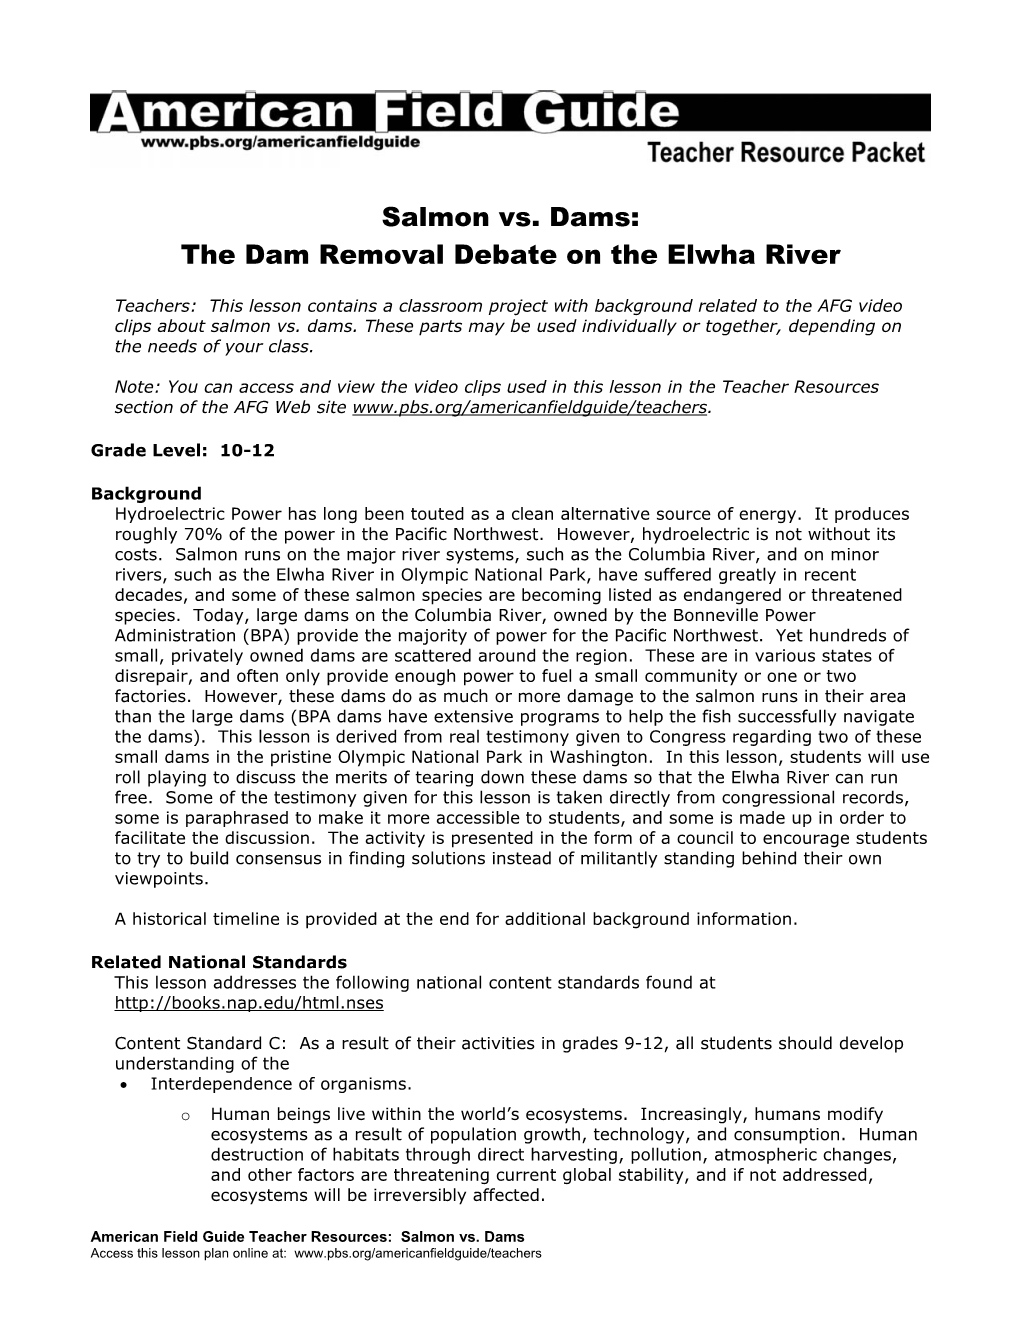 Salmon Vs. Dams: the Dam Removal Debate on the Elwha River